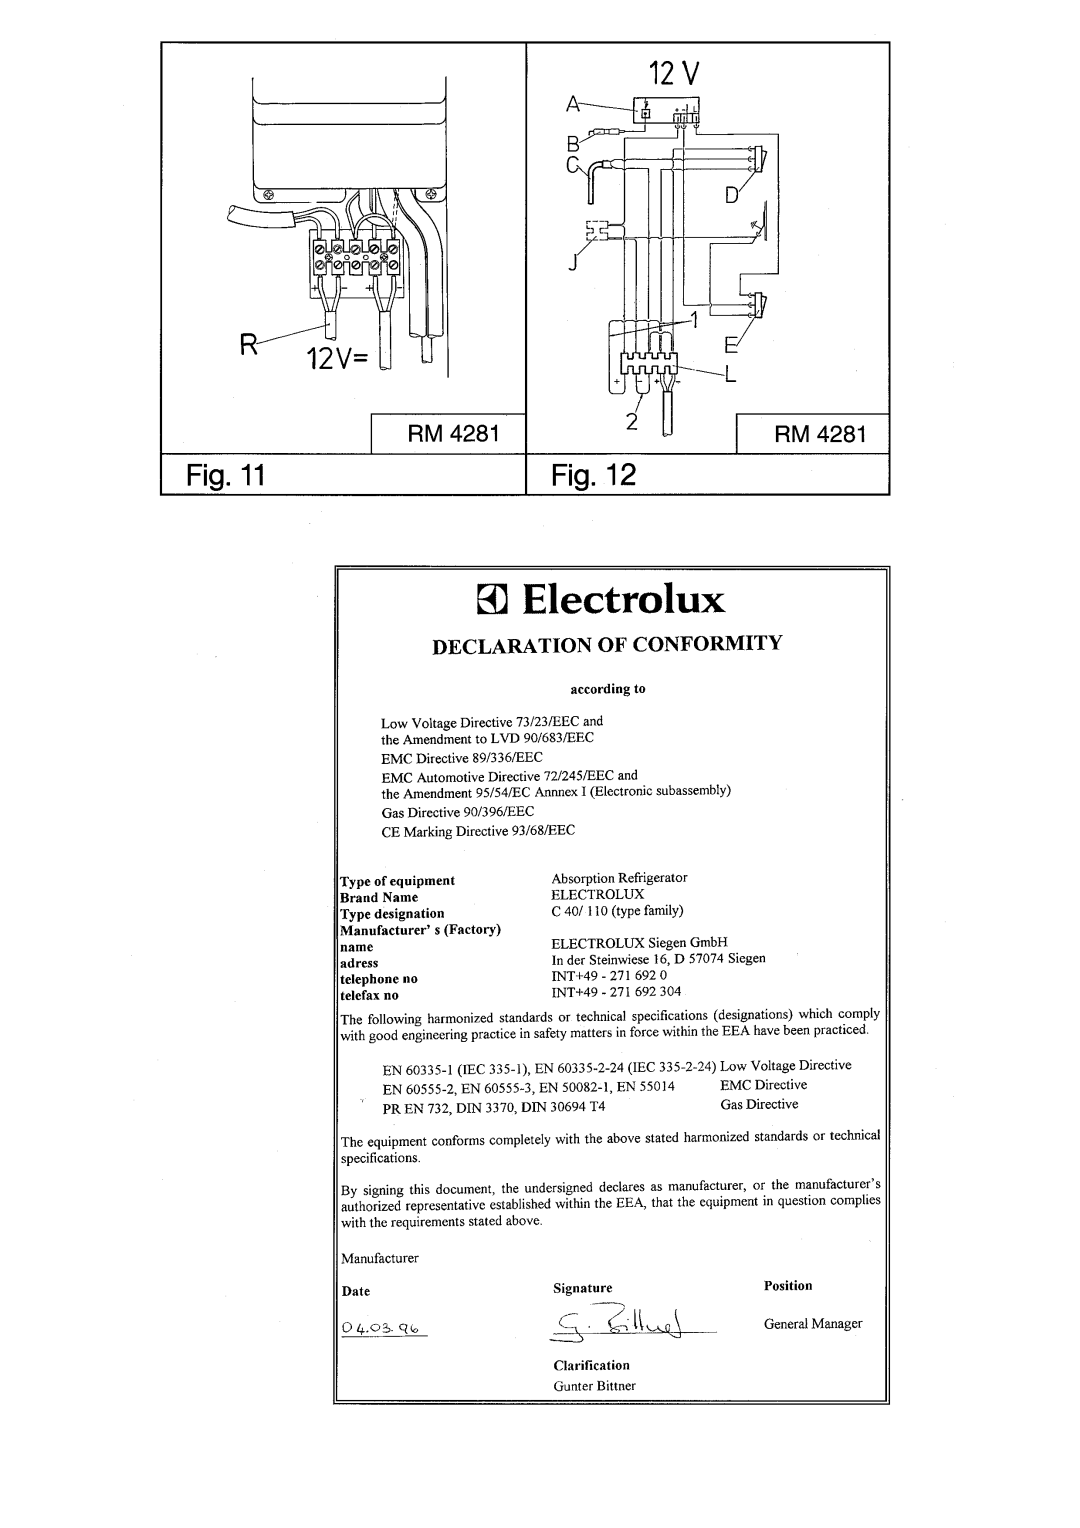 Electrolux RM 4281, RM 4280 manual 